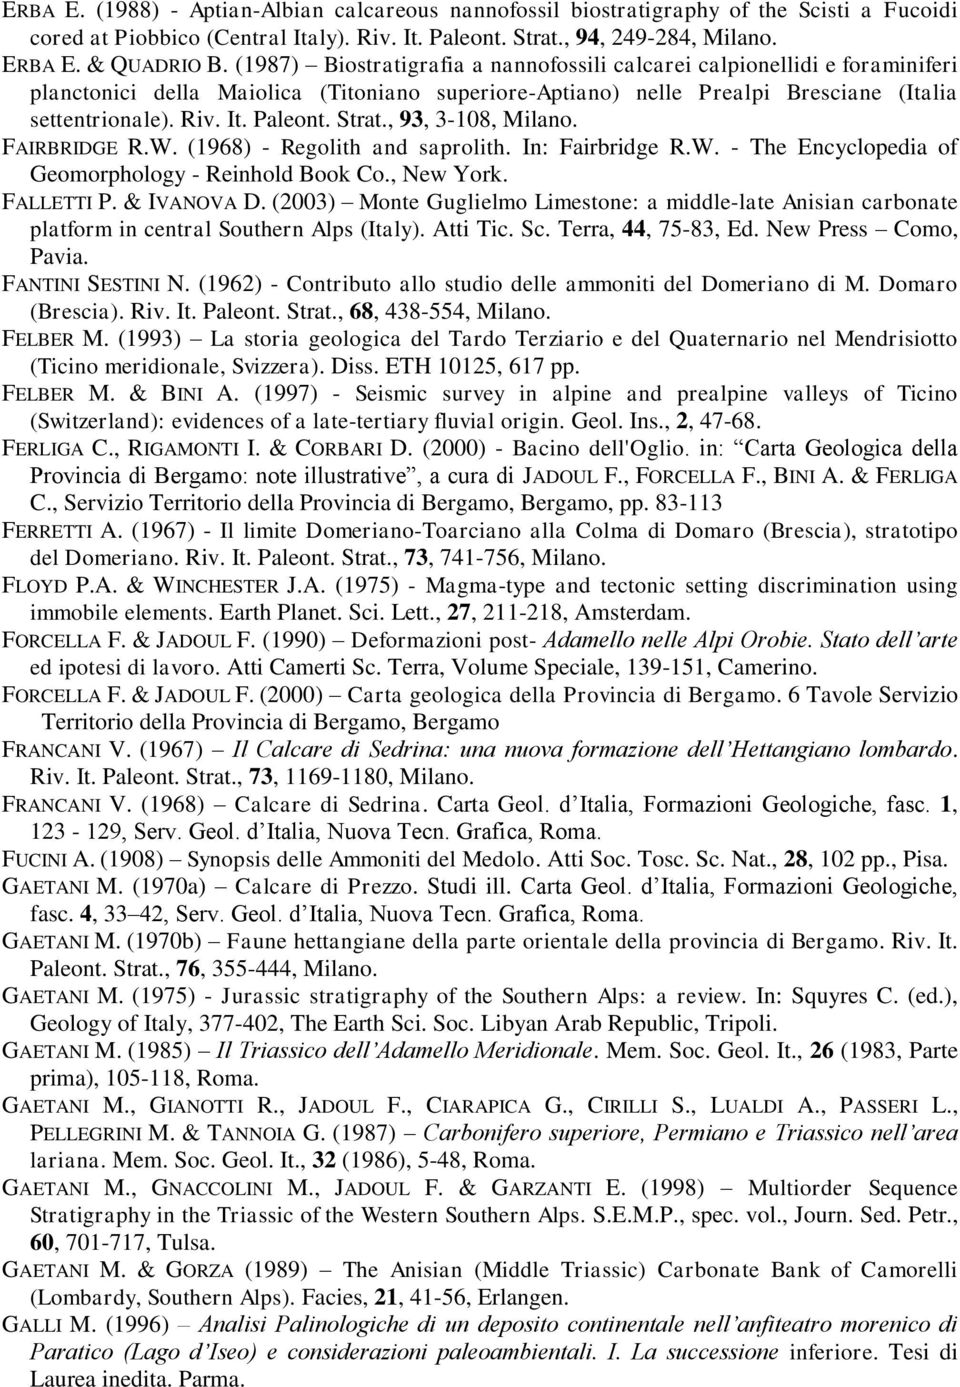 Strat., 93, 3-108, Milano. FAIRBRIDGE R.W. (1968) - Regolith and saprolith. In: Fairbridge R.W. - The Encyclopedia of Geomorphology - Reinhold Book Co., New York. FALLETTI P. & IVANOVA D.